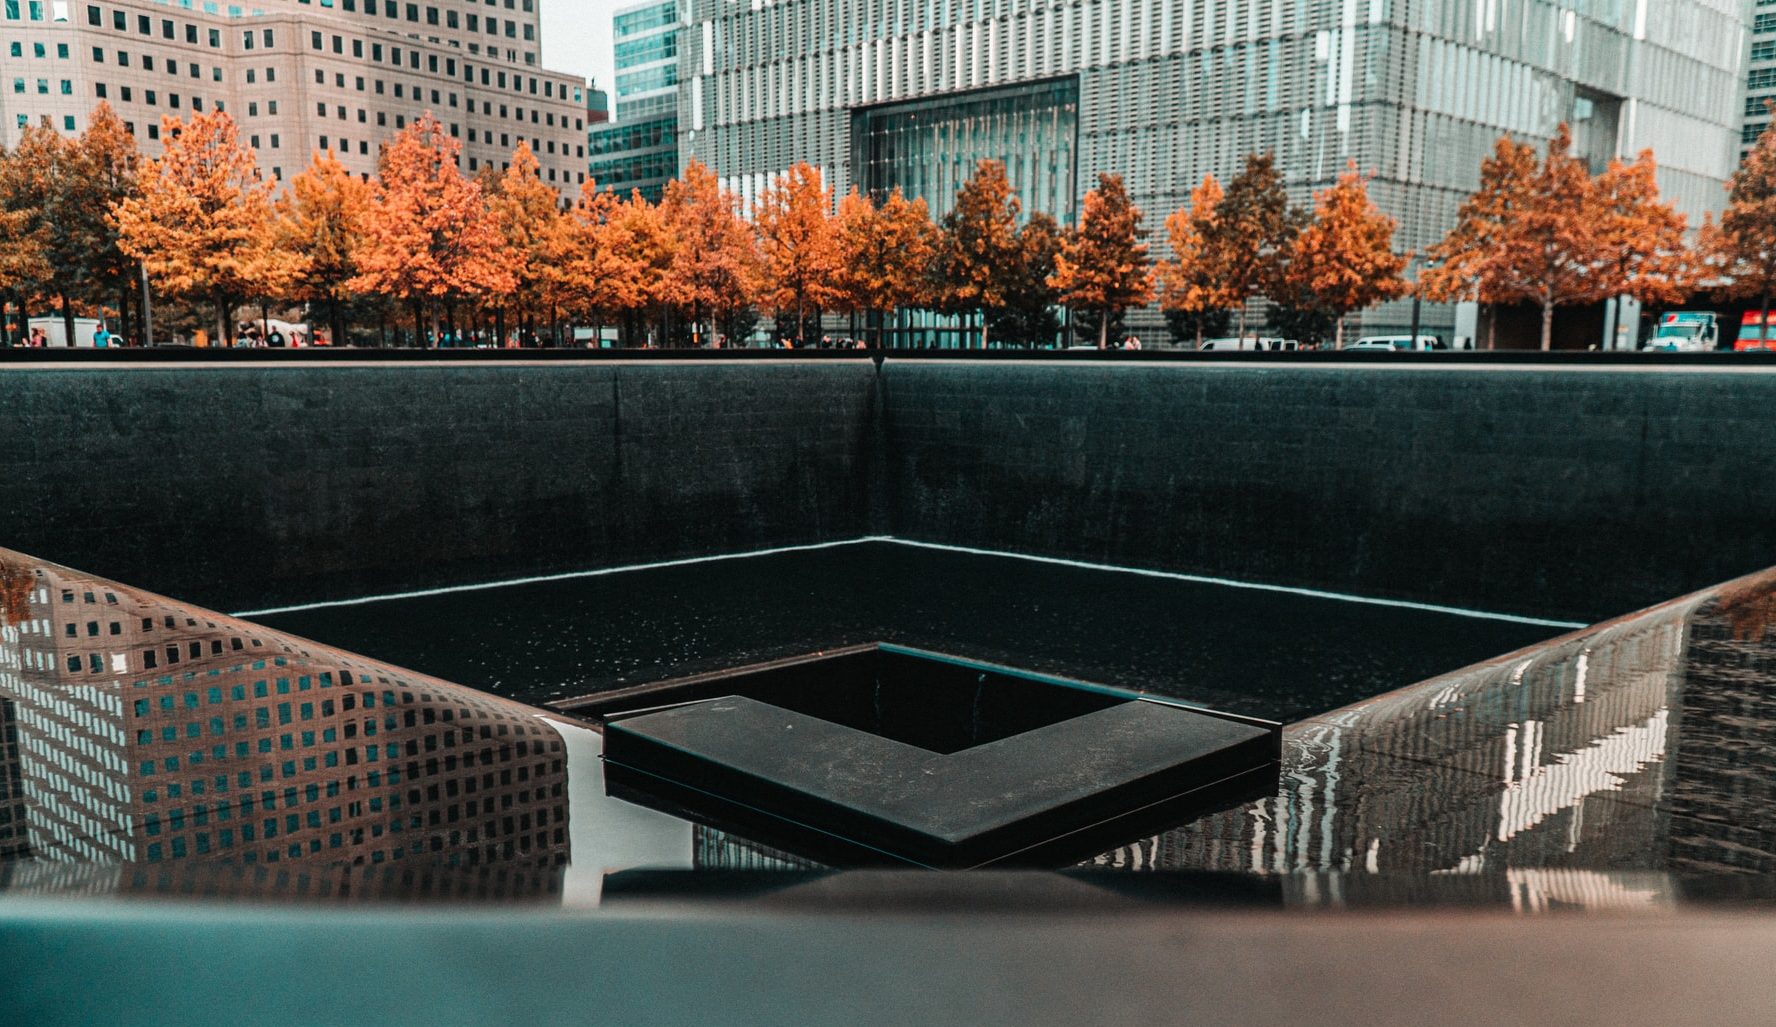 9/11 Memorial fountain at Ground Zero NYC